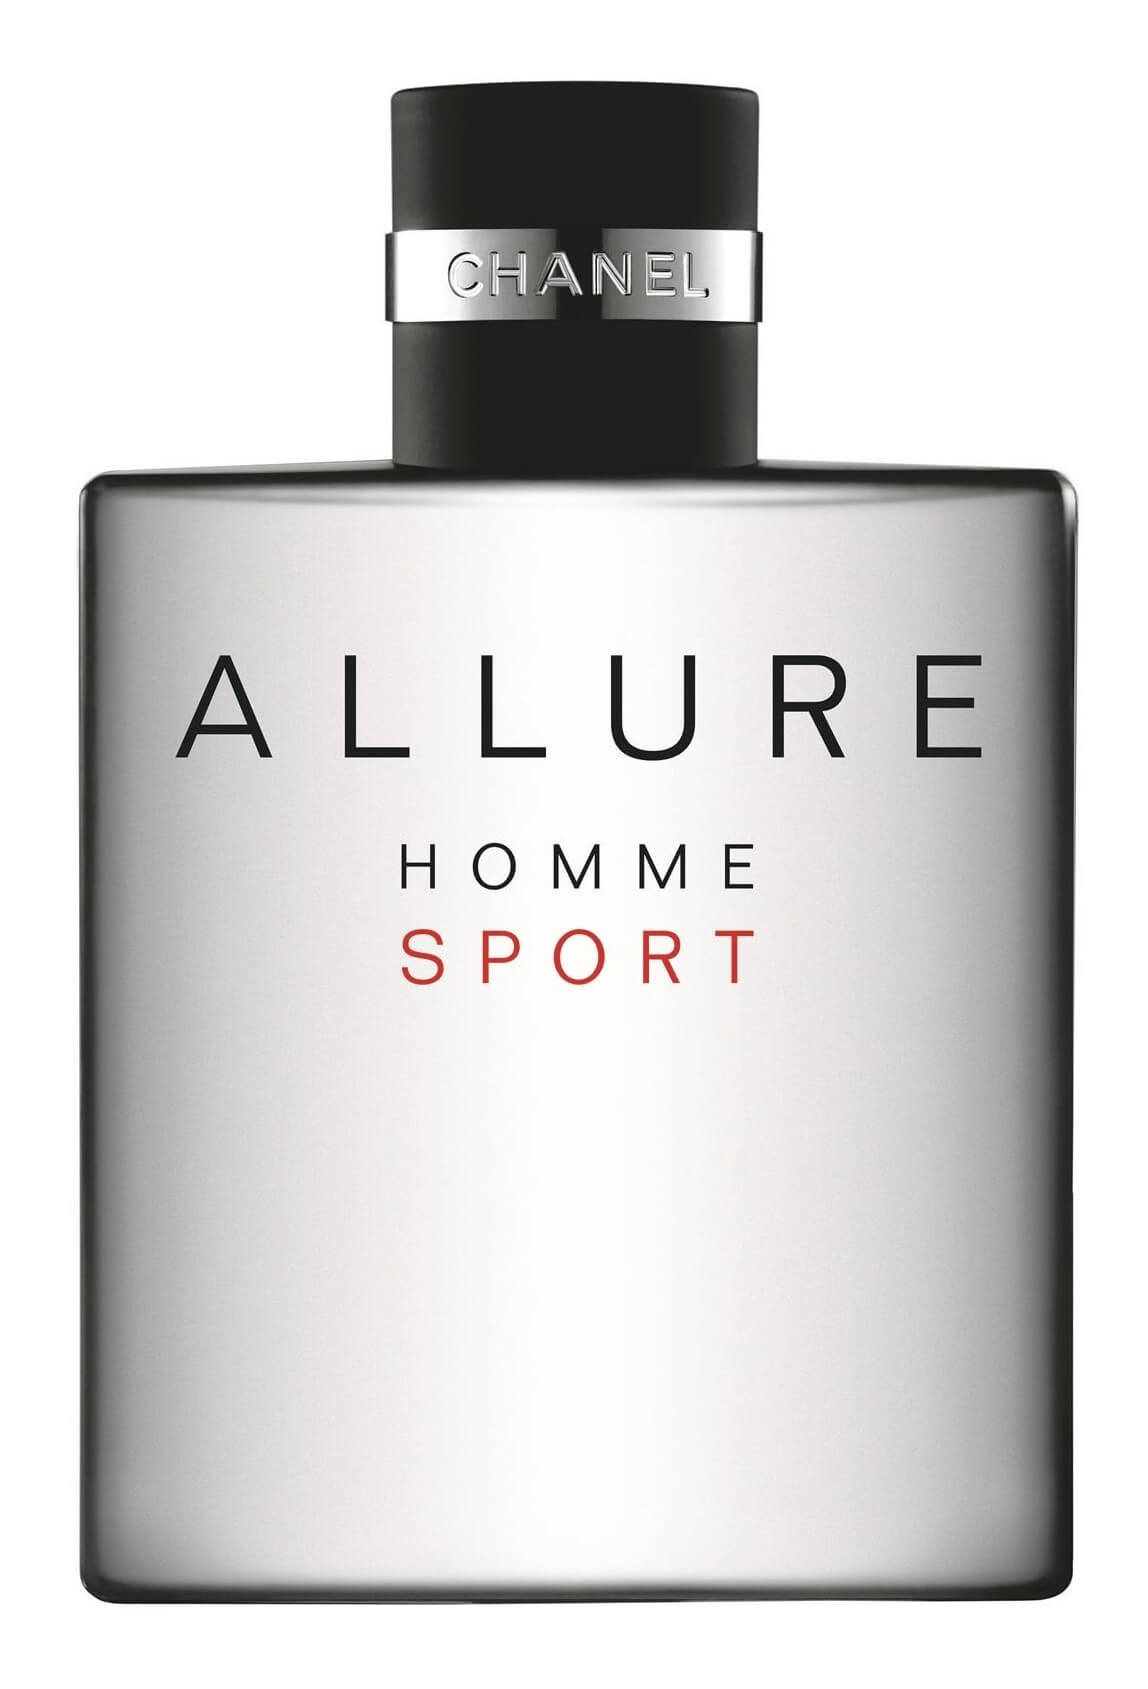 Chanel allure homme sport цены. Шанель Аллюр спорт 100мл. Chanel Allure homme Sport. Chanel Allure homme Sport 100ml. Chanel Allure homme Sport EDT 100 ml.